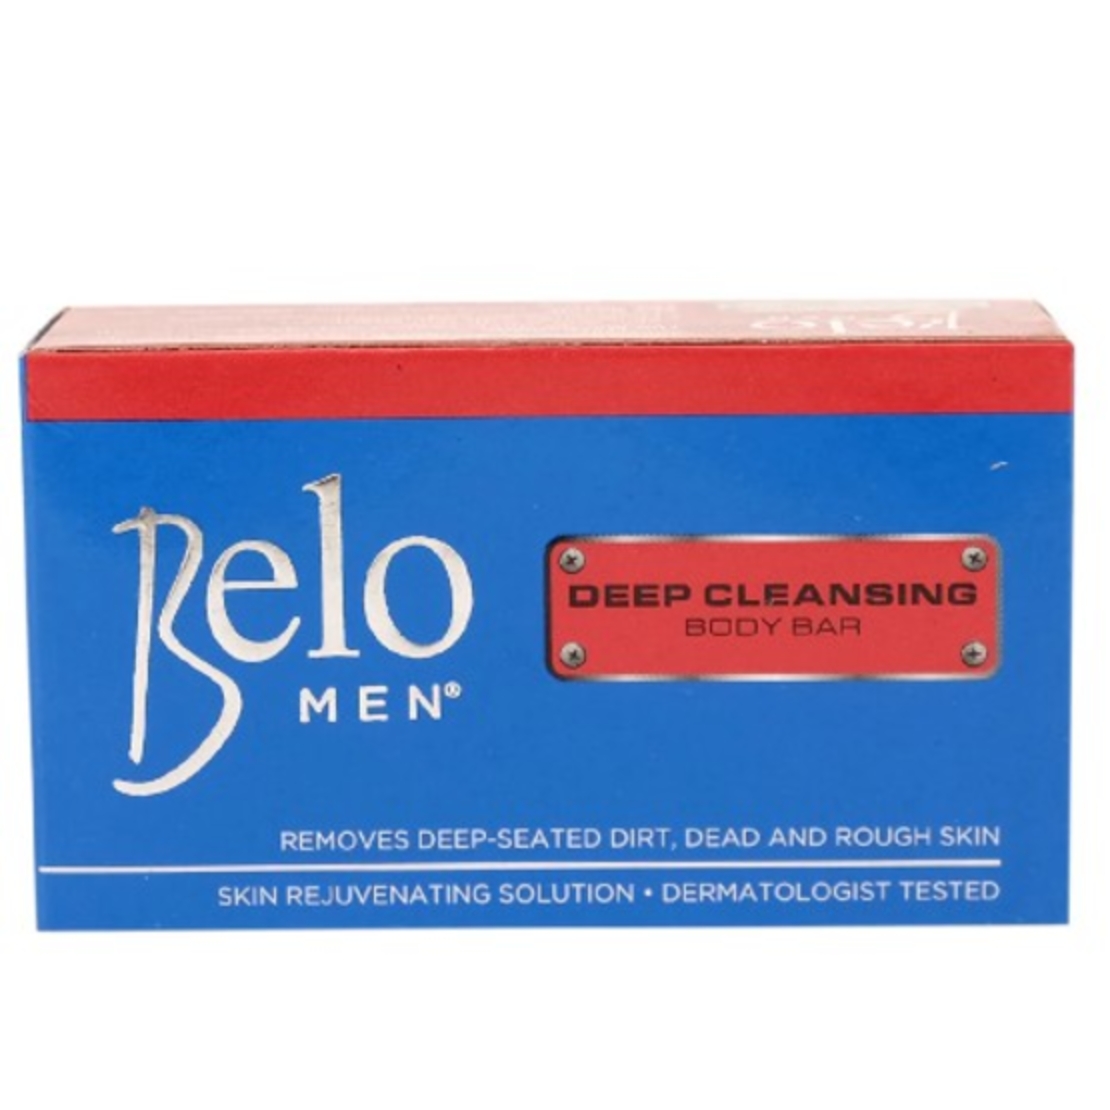 Belo Men Deep Cleansing Body Bar 135g